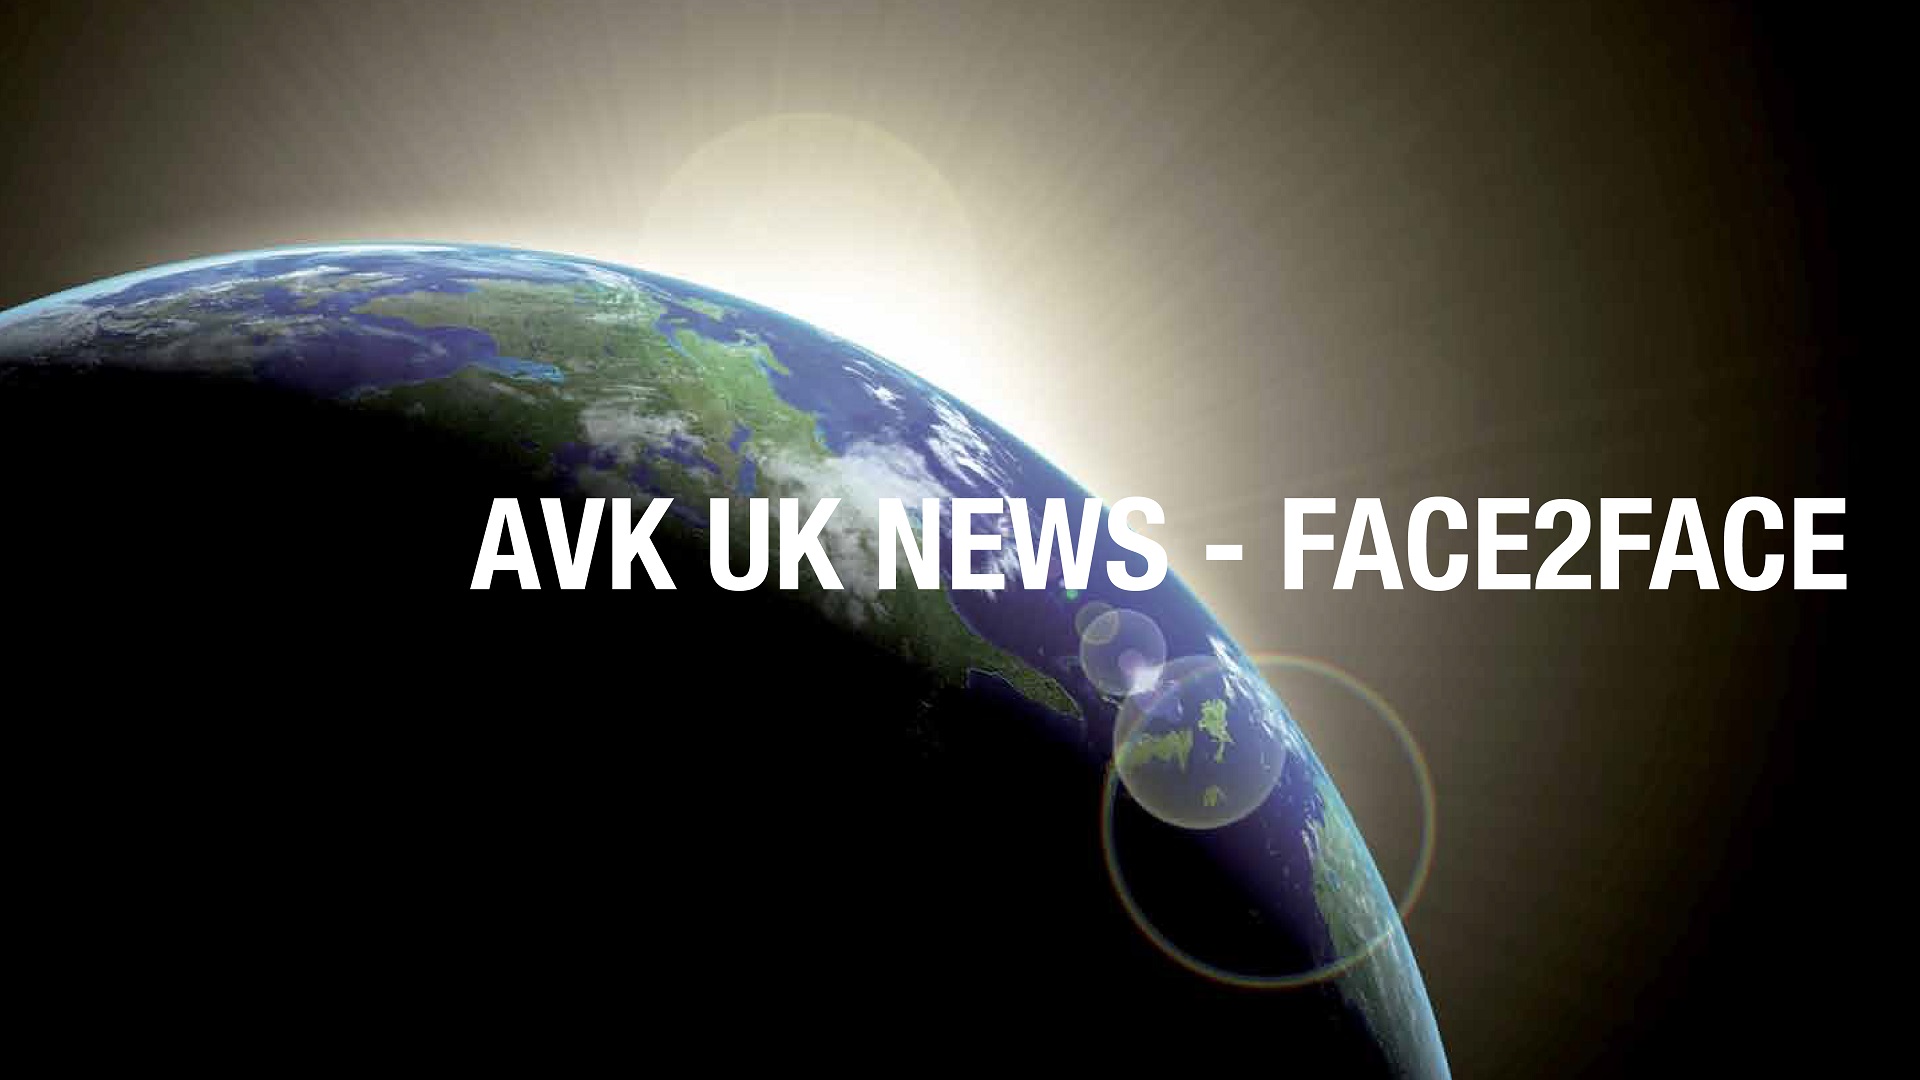 AVK UK Face 2 Face news